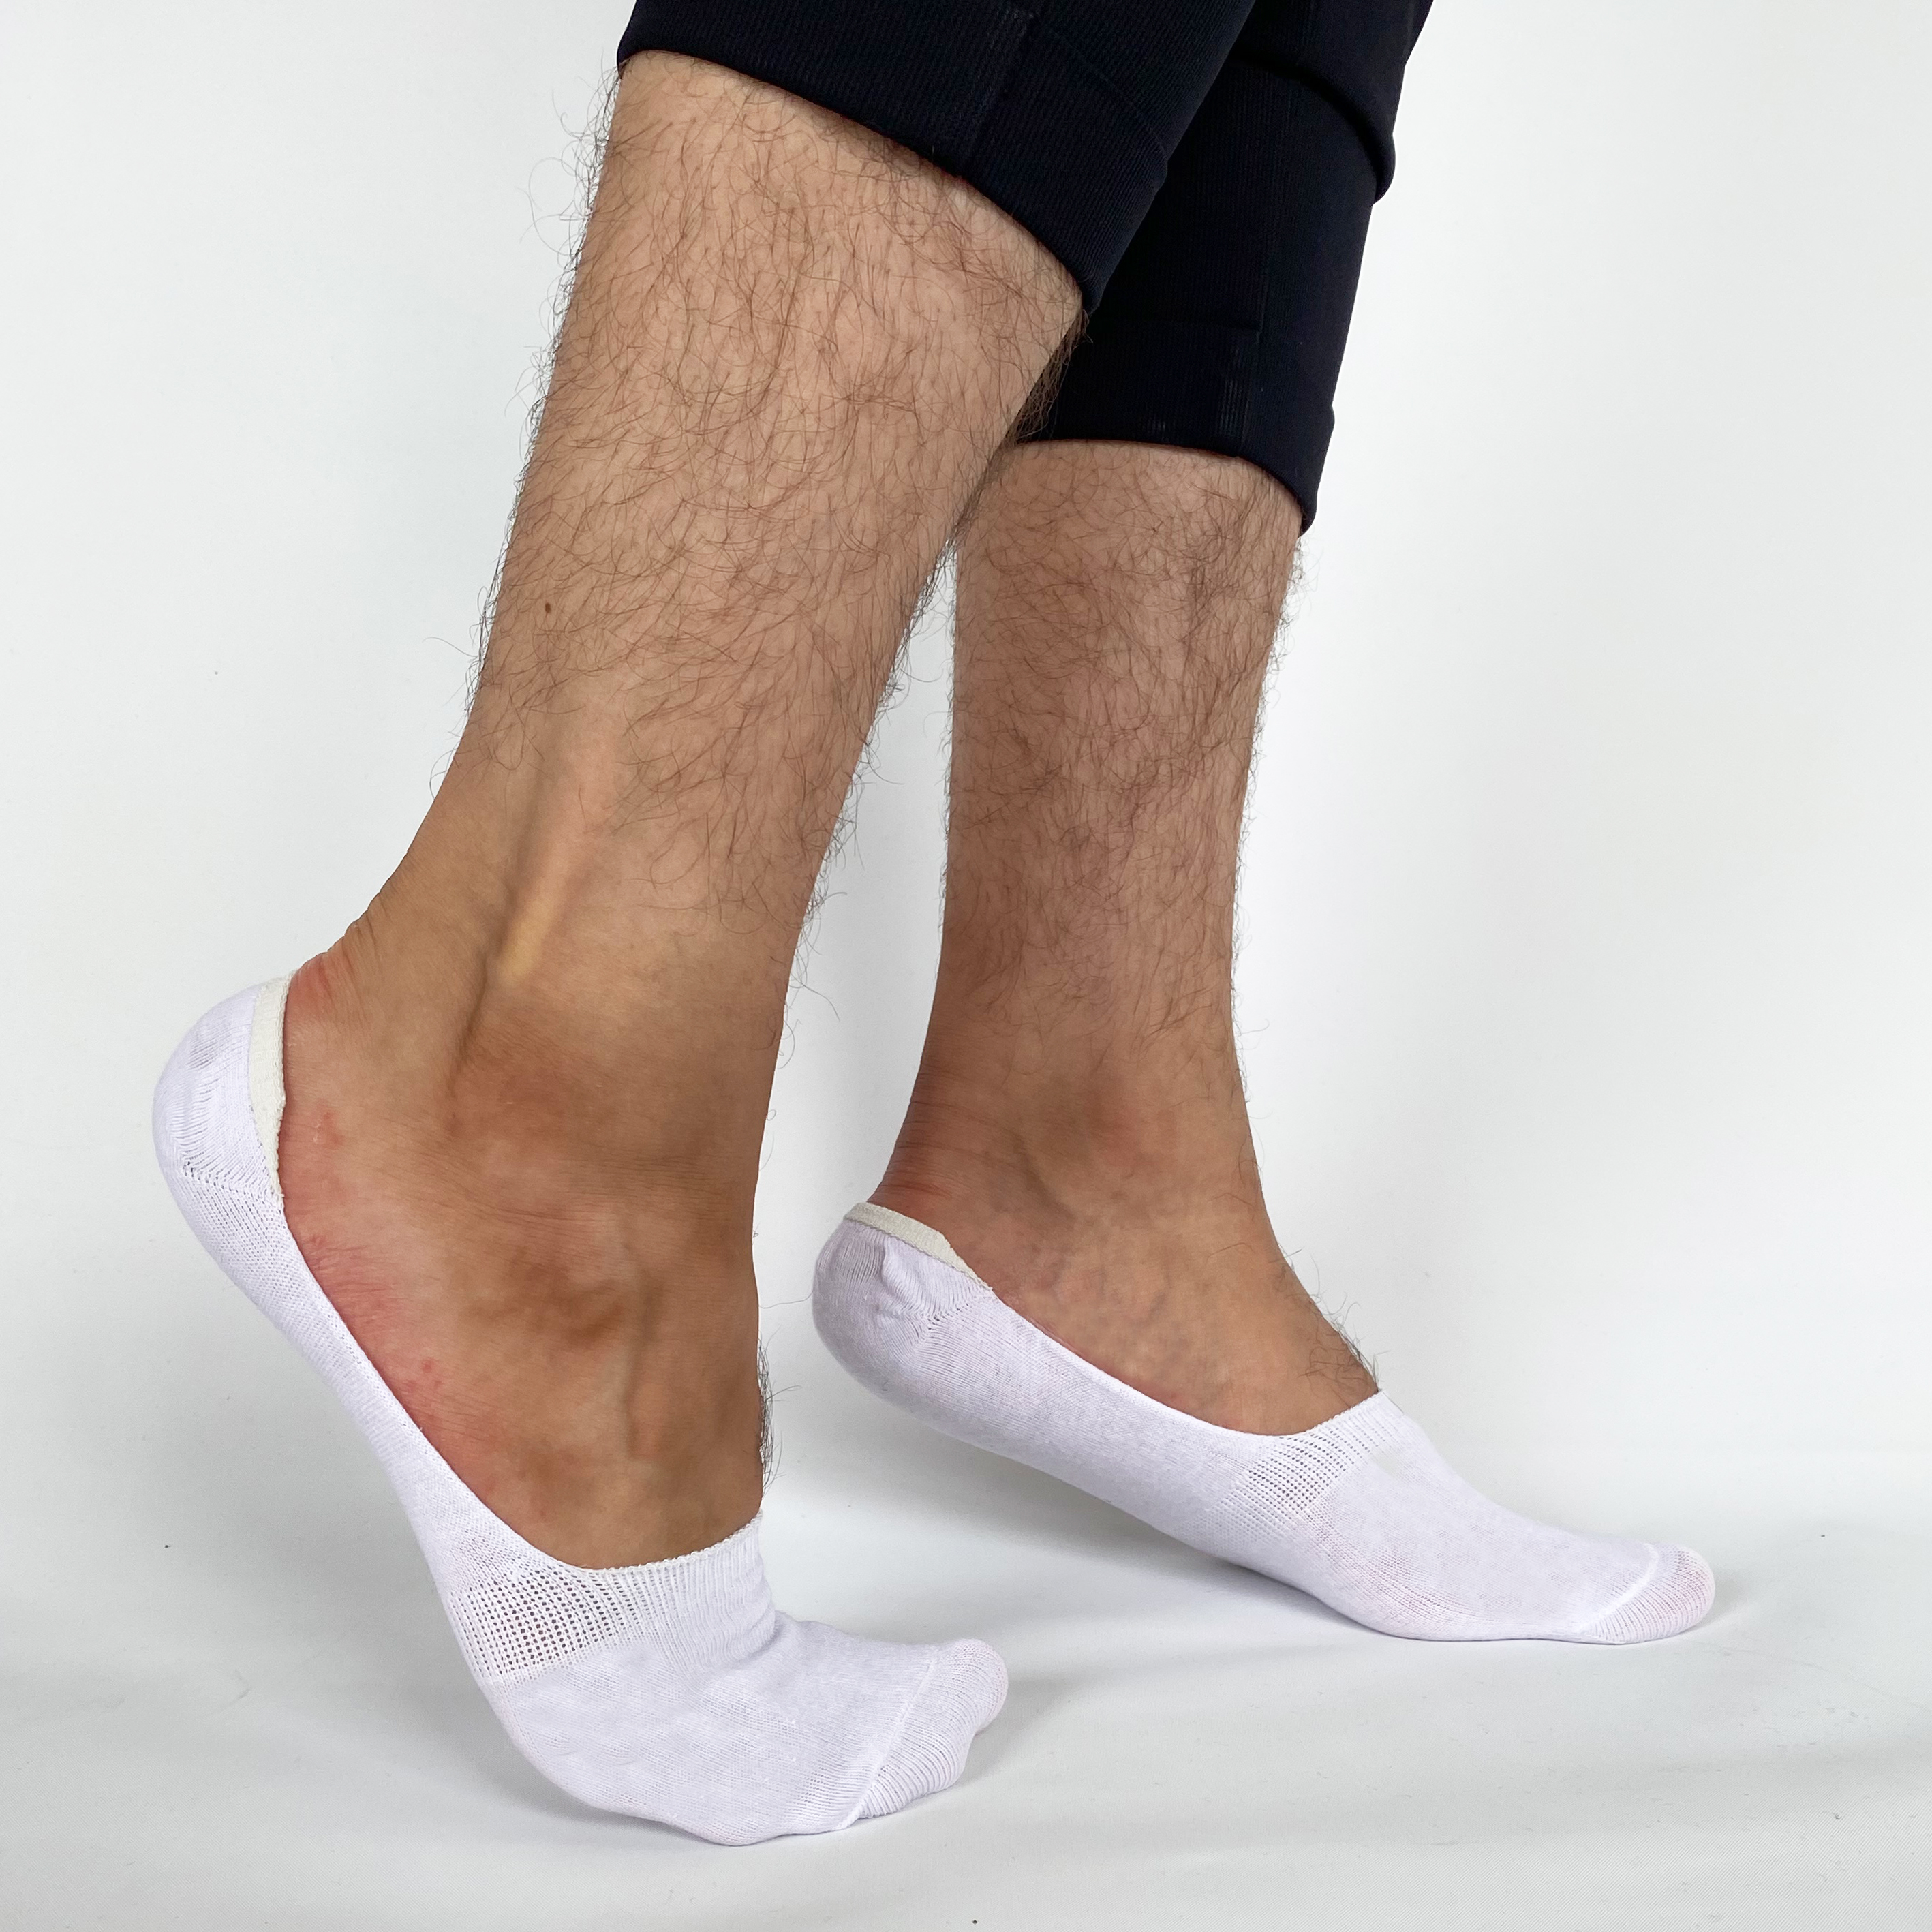 Mens Invisible Trainer Socks 5 Pack Hidden Socks Cotton Rich No